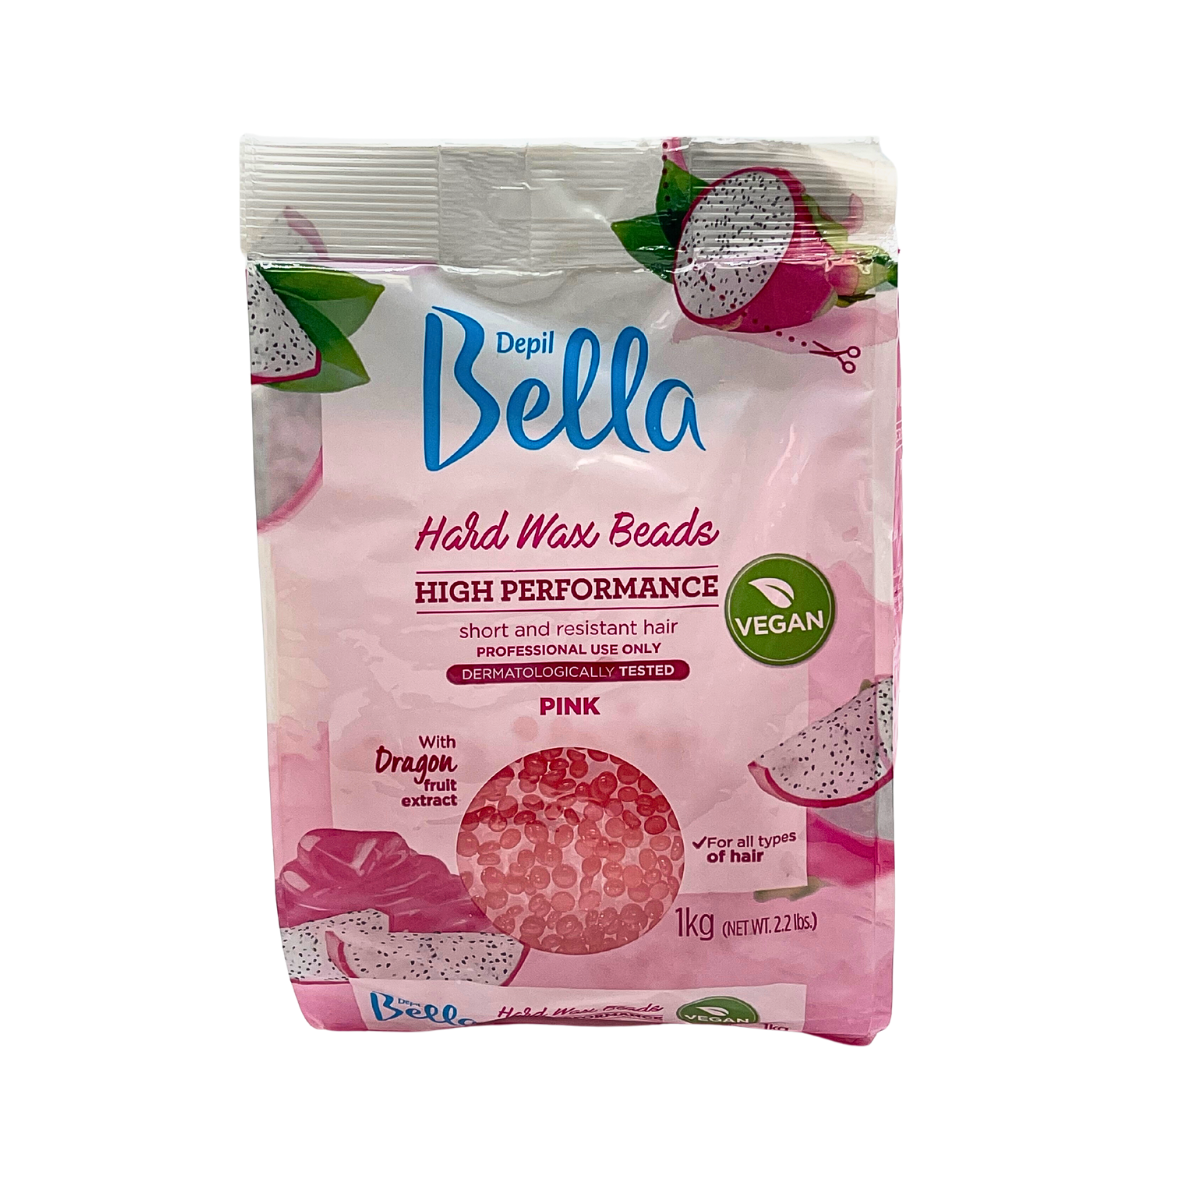 Depil Bella Pink Pitaya Confetti Hard Wax Beads- High-Performance Hair Removal, Vegan 2.2 lbs (10 Units Offer)